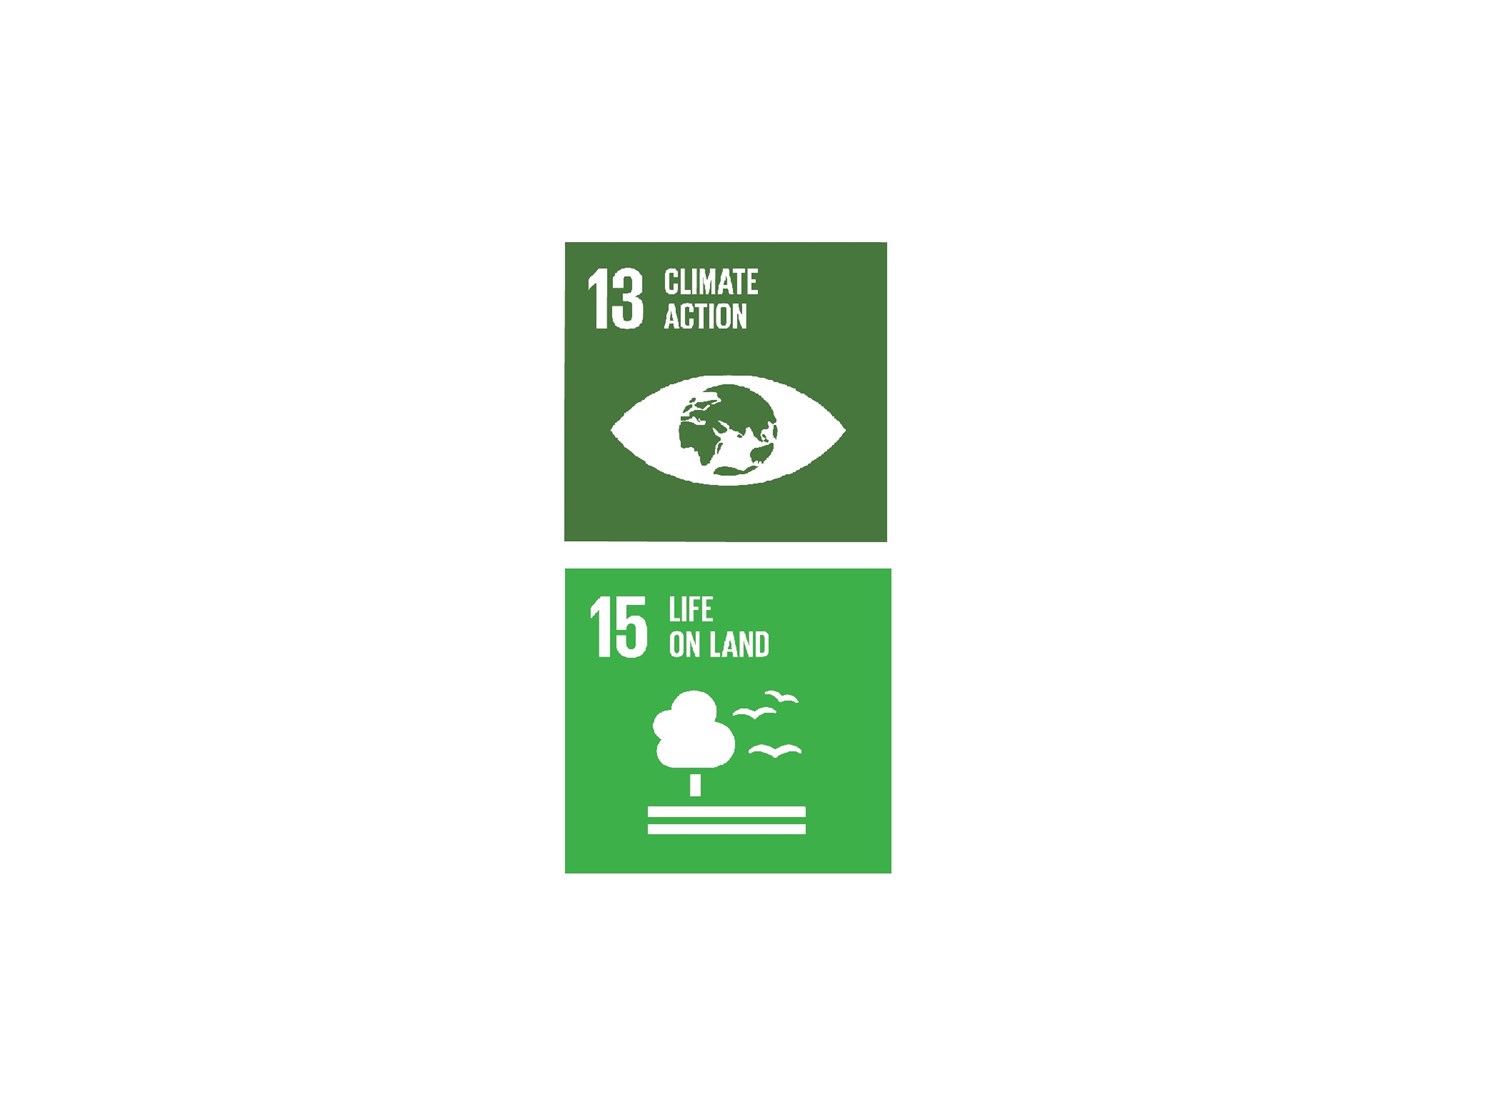 contribution towards sustainable development goals